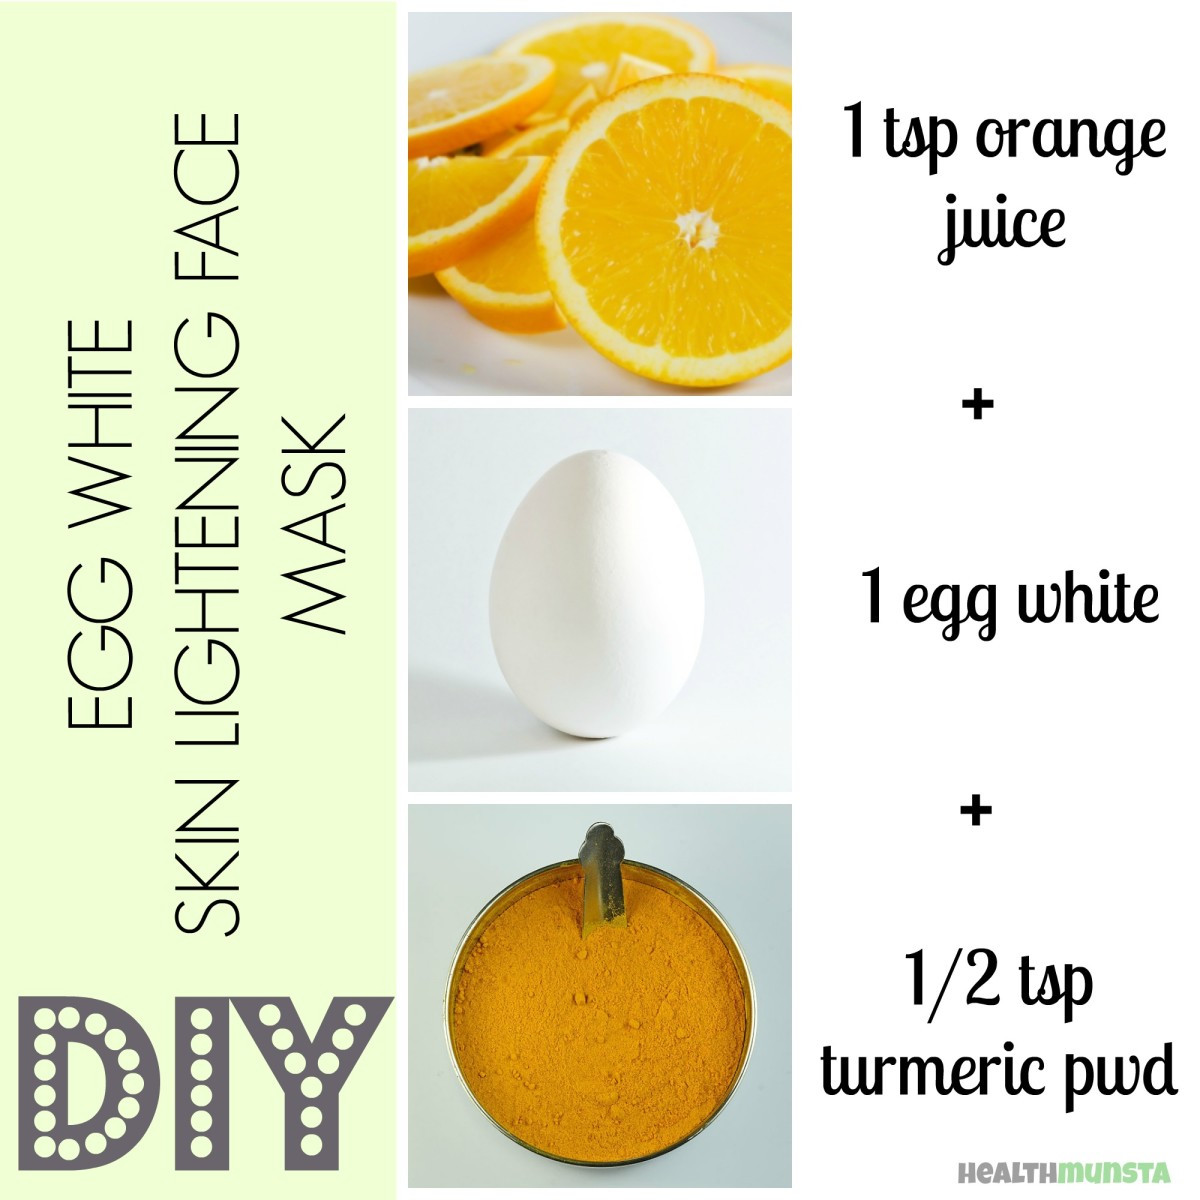 Egg White Mask DIY
 DIY Egg White Face Mask Recipes for Beautiful Skin